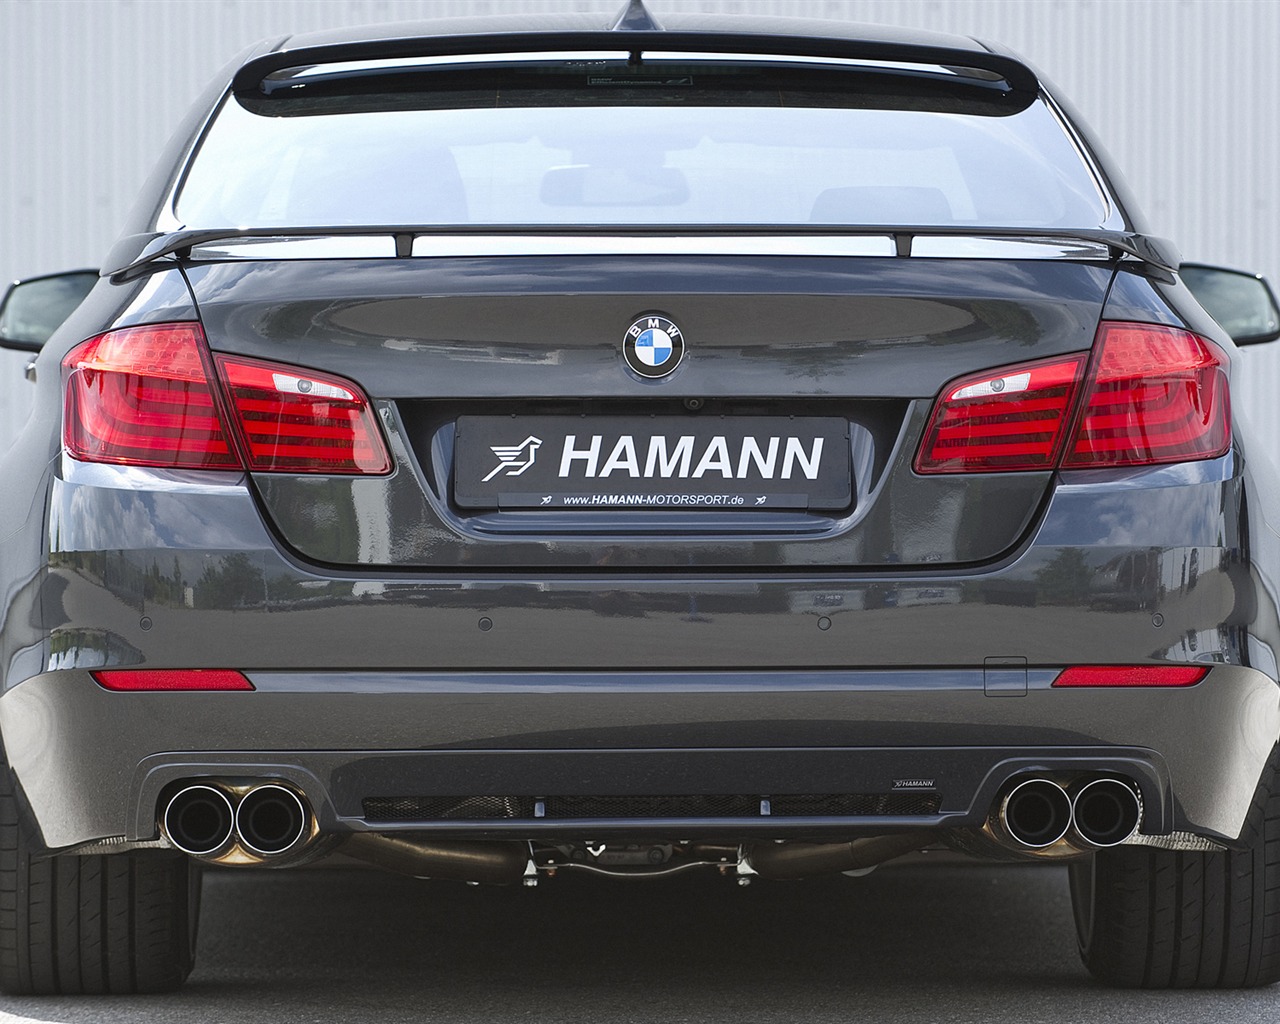 Hamann BMW 5-series F10 - 2010 寶馬 #14 - 1280x1024